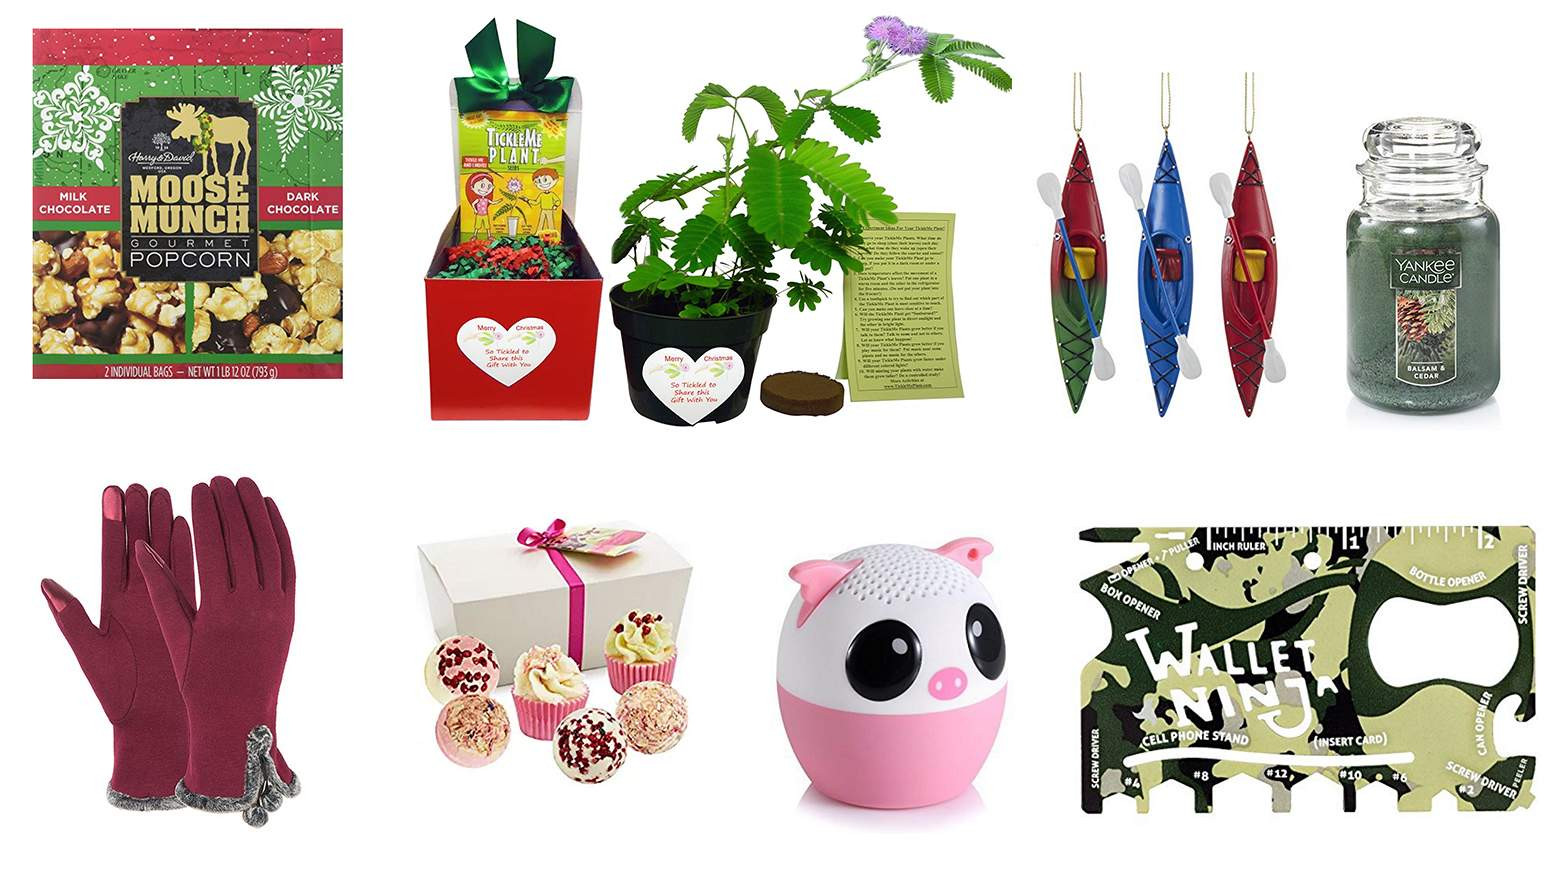 Best ideas about Office Secret Santa Gift Ideas
. Save or Pin Top 20 Best Secret Santa Gift Ideas Now.